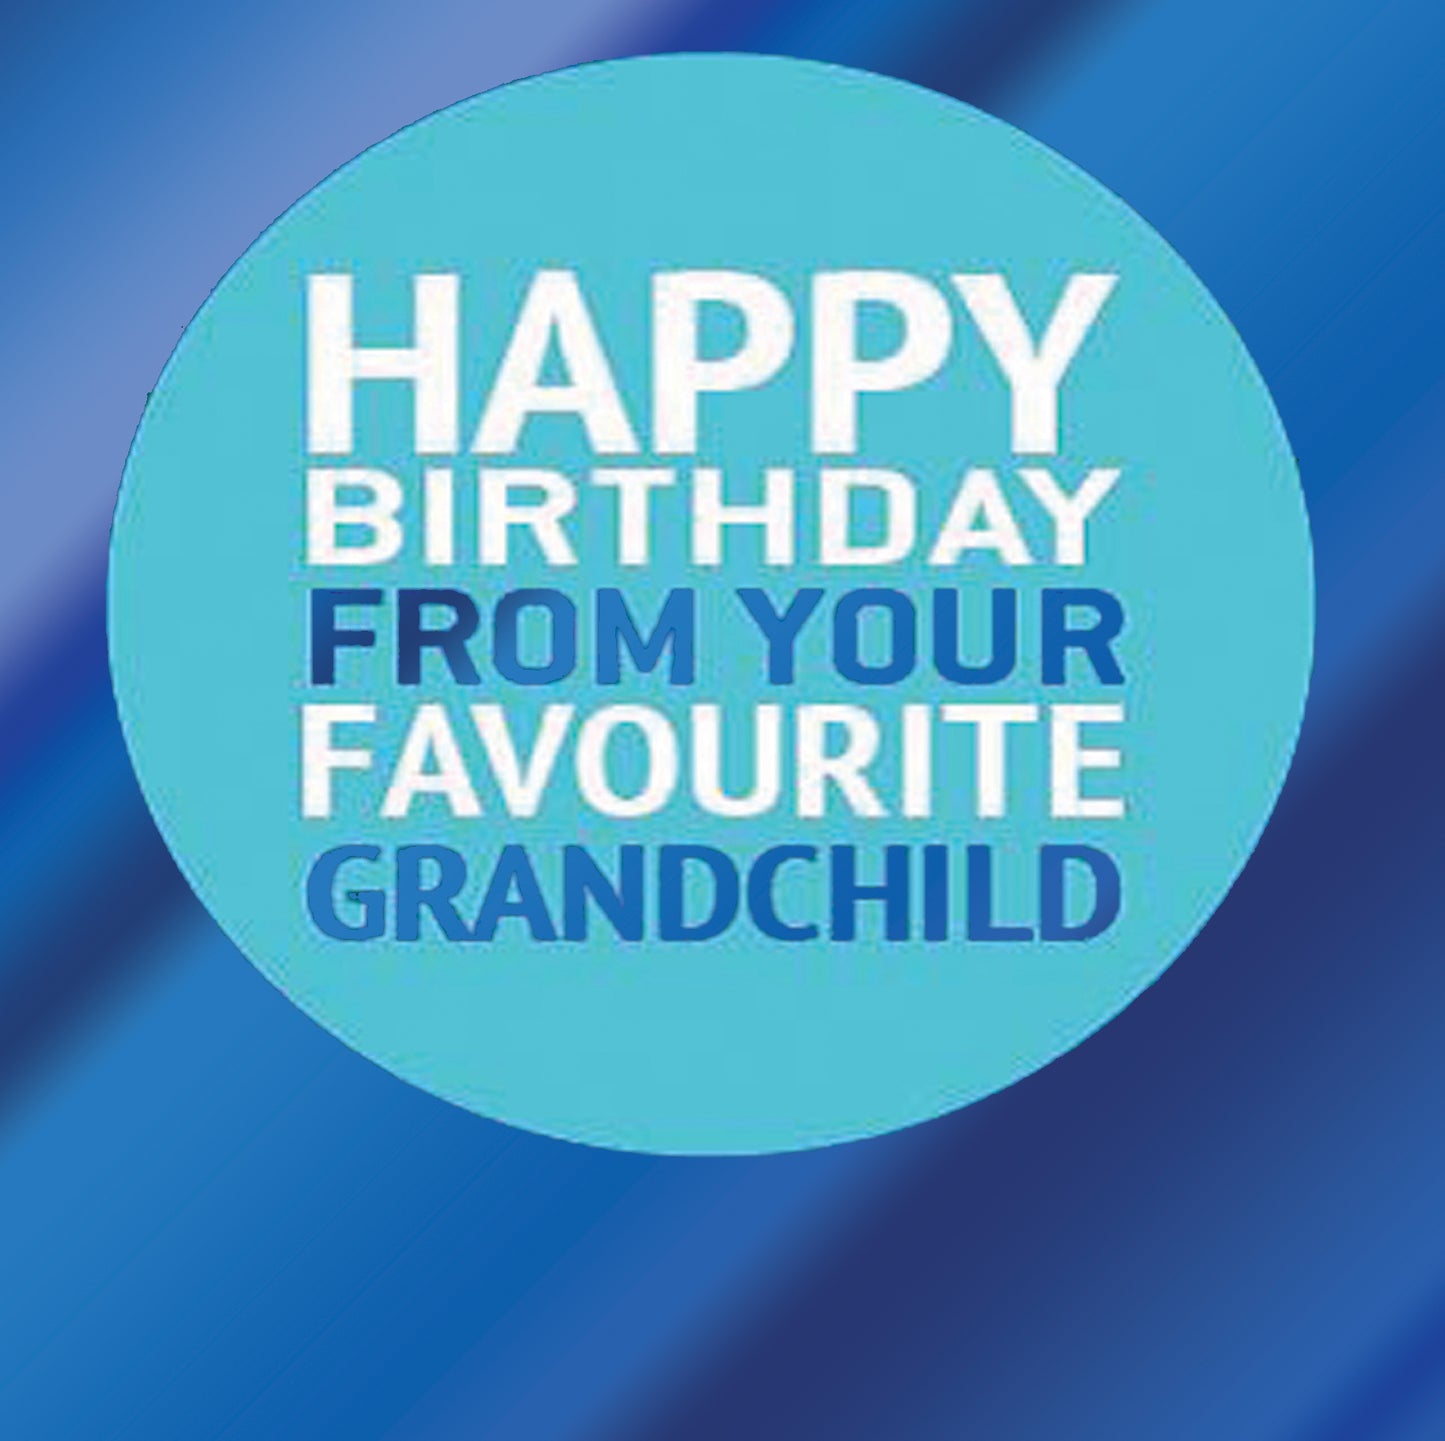 Your Favourite Grandchild Humour Birthday Card